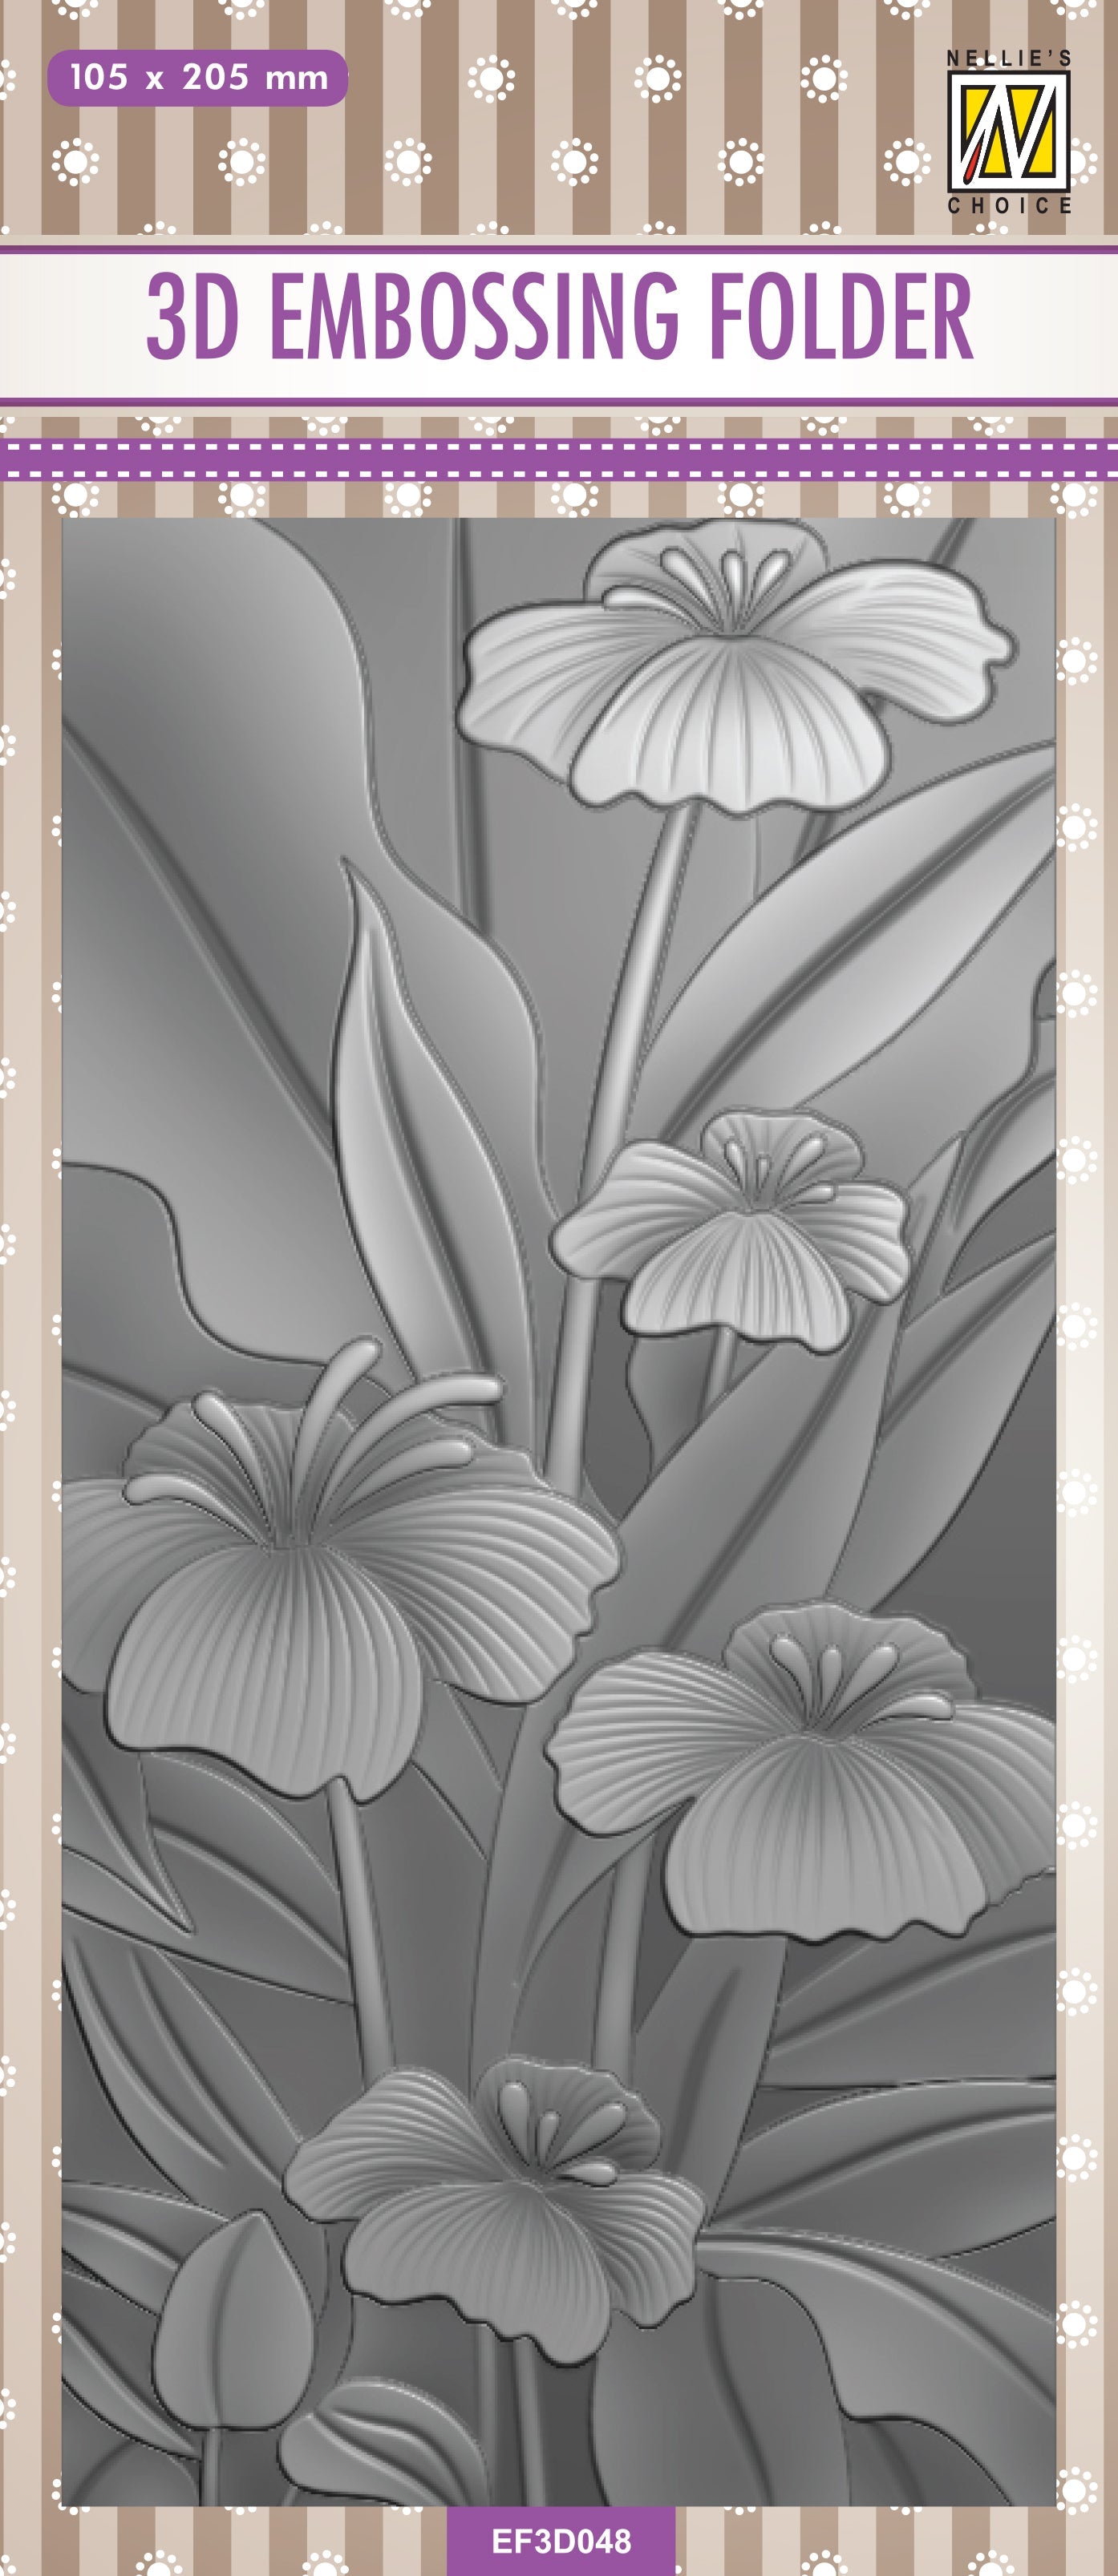 Nellie's Choice 3D Embossing Folder Slimline - Lilies